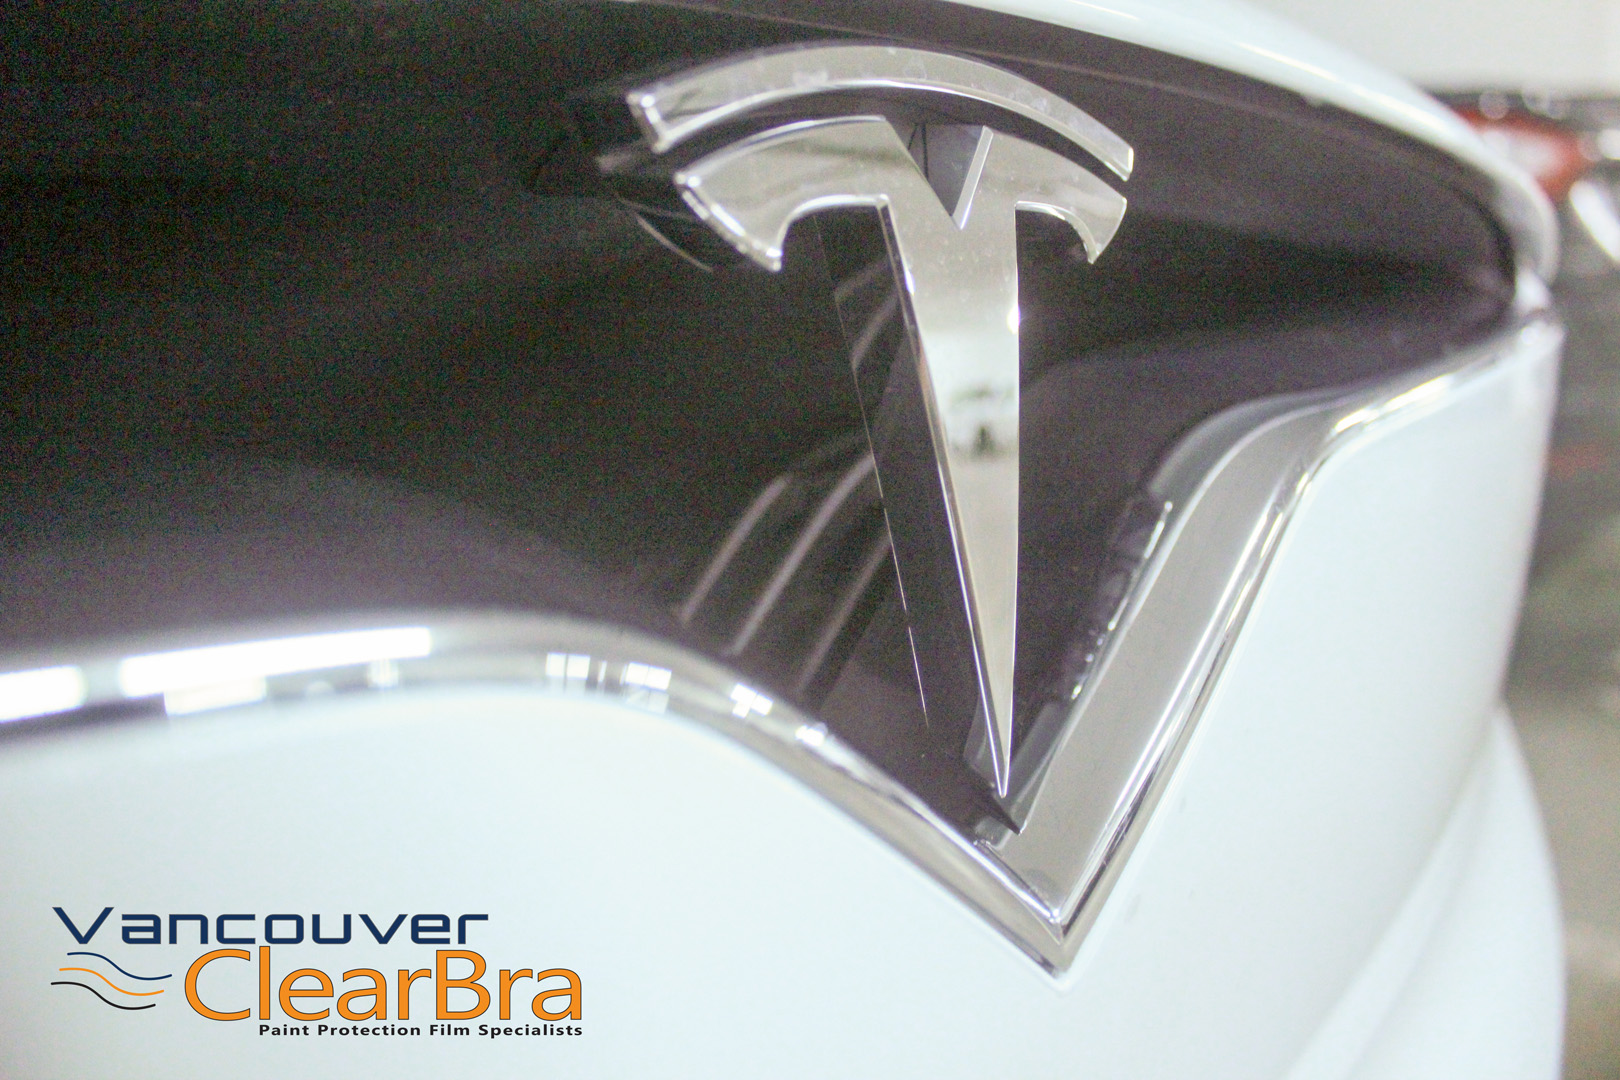 Tesla Moncton Clear Bra Xpel SunTek 3M Hexis - Moncton ClearBra